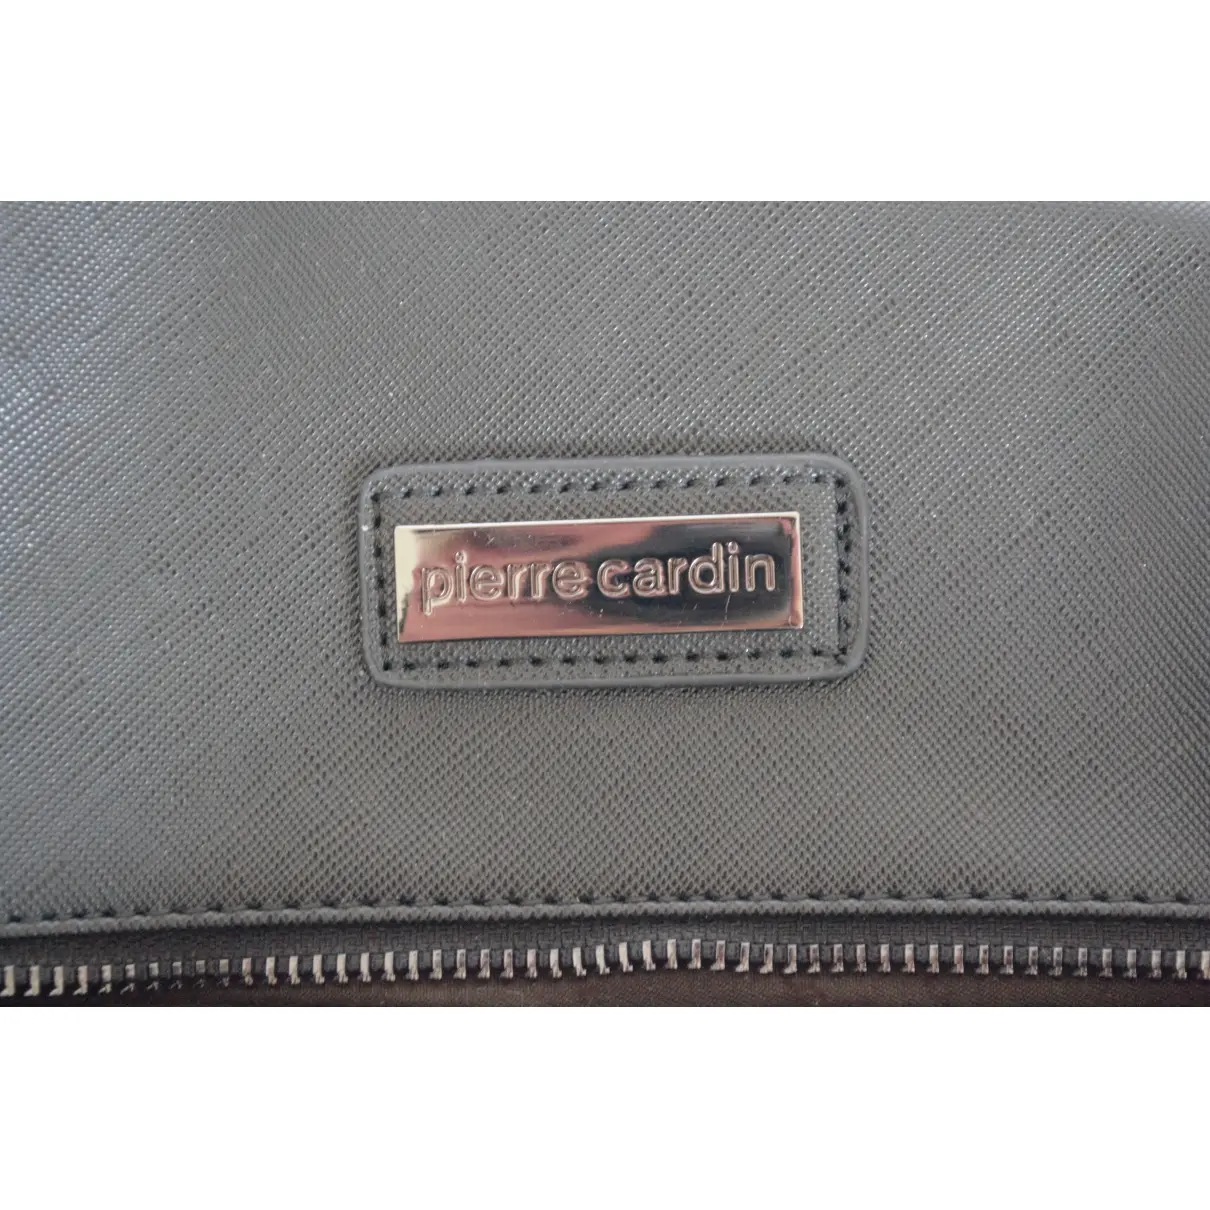 Buy Pierre Cardin Backpack online